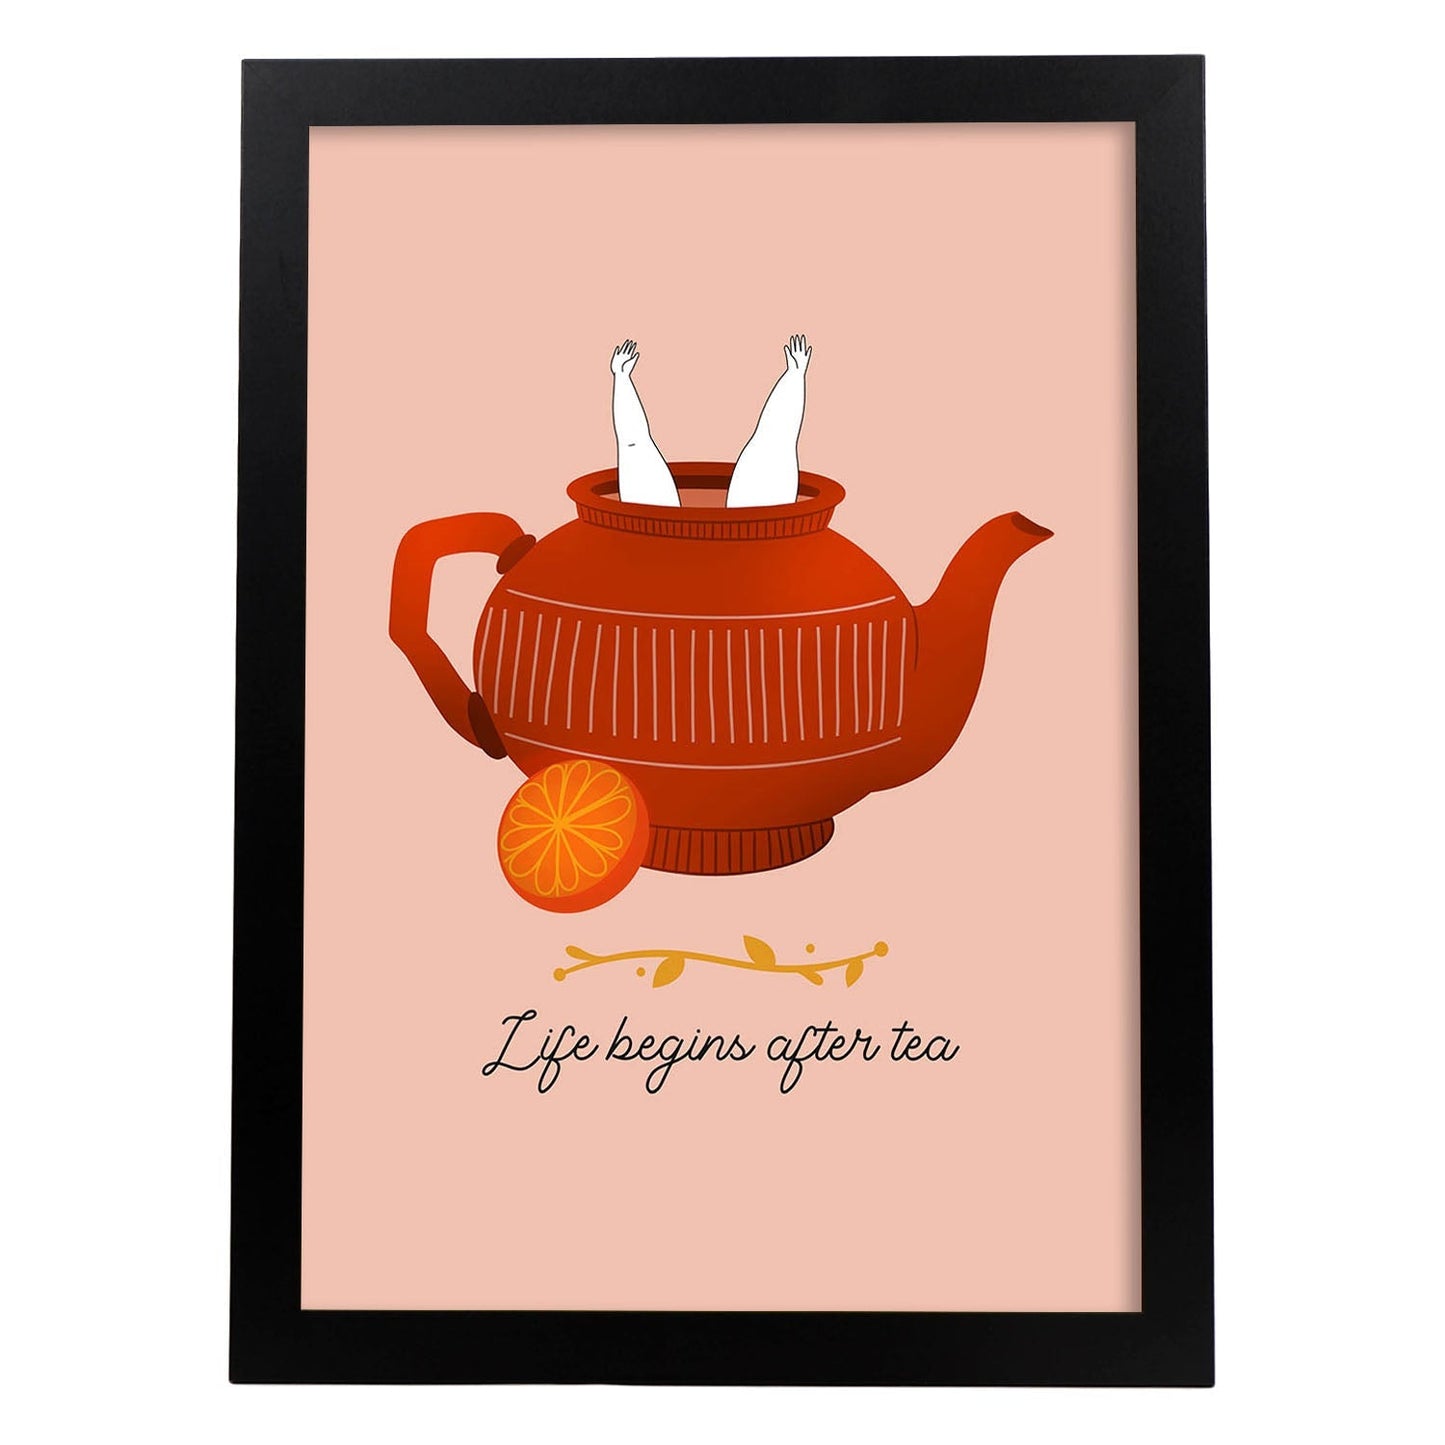 Set de láminas La vida después del té. Pósters con ilustraciones para amantes del té y el café.-Artwork-Nacnic-A4-Marco Negro-Nacnic Estudio SL